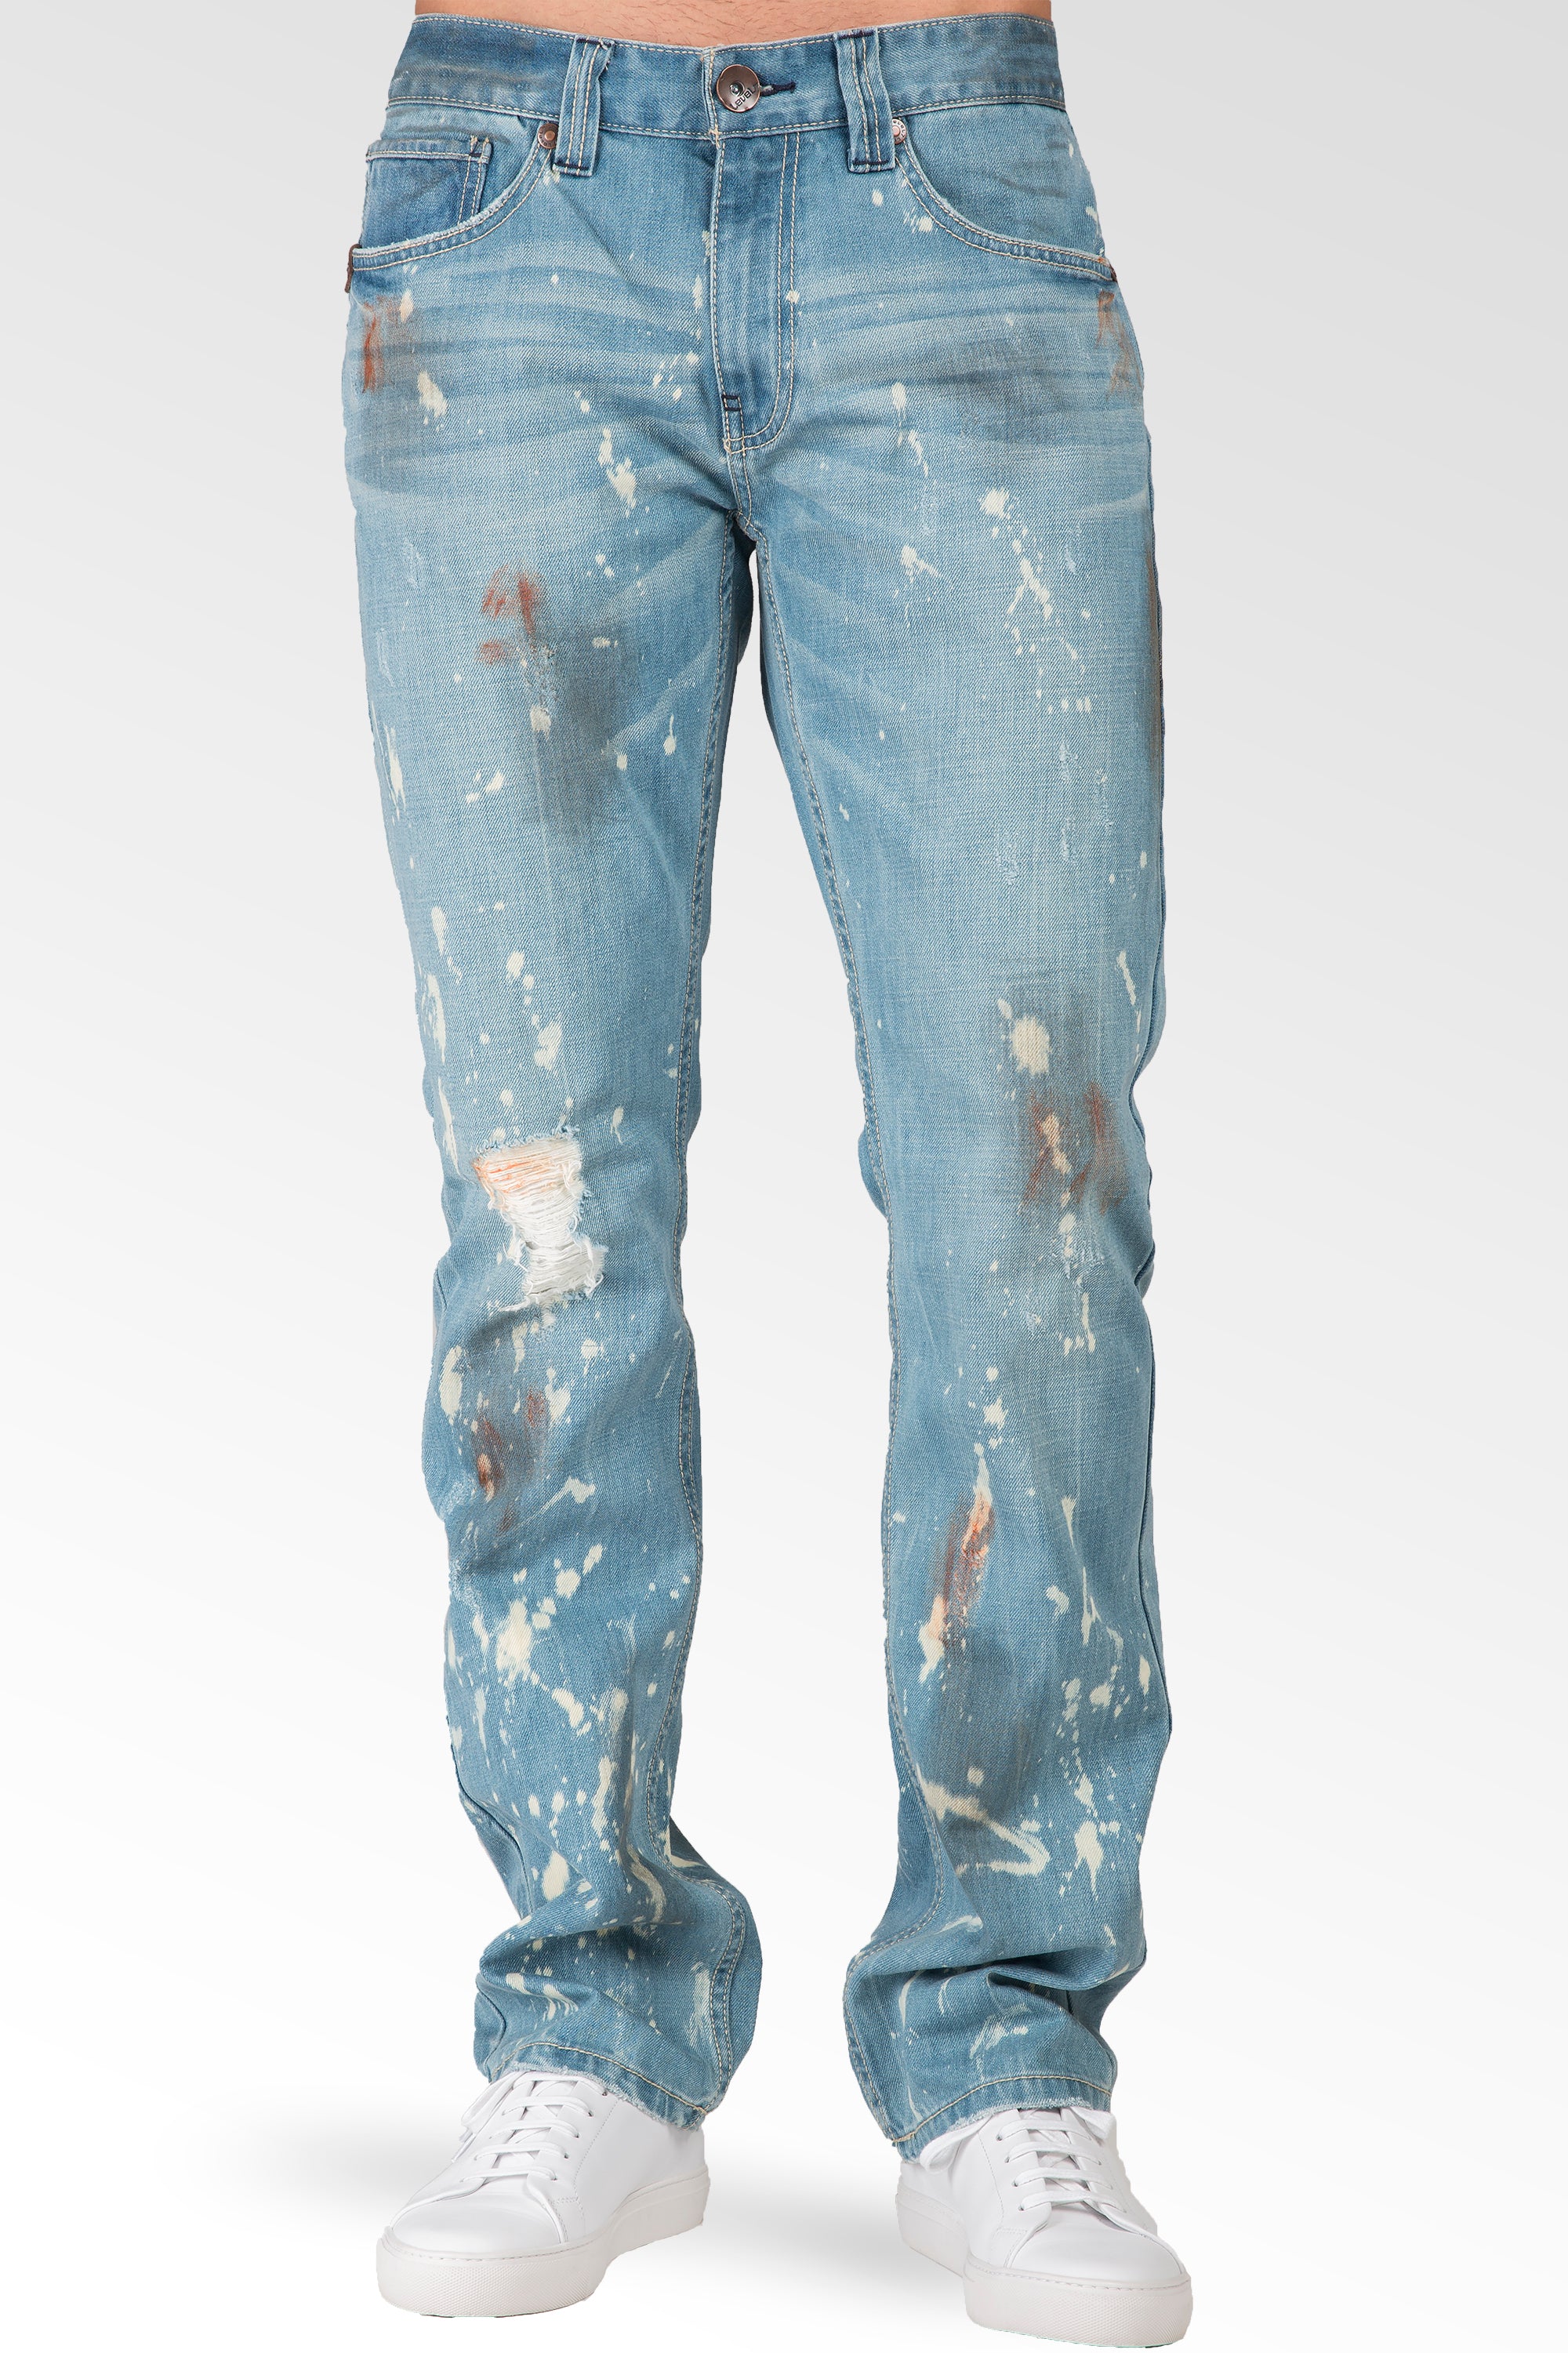 dood Wereldvenster Voorschrijven Level 7 Men's Slim Straight Light Paint Splatter Wash 5 Pocket jeans  Premium Denim – Level 7 Jeans